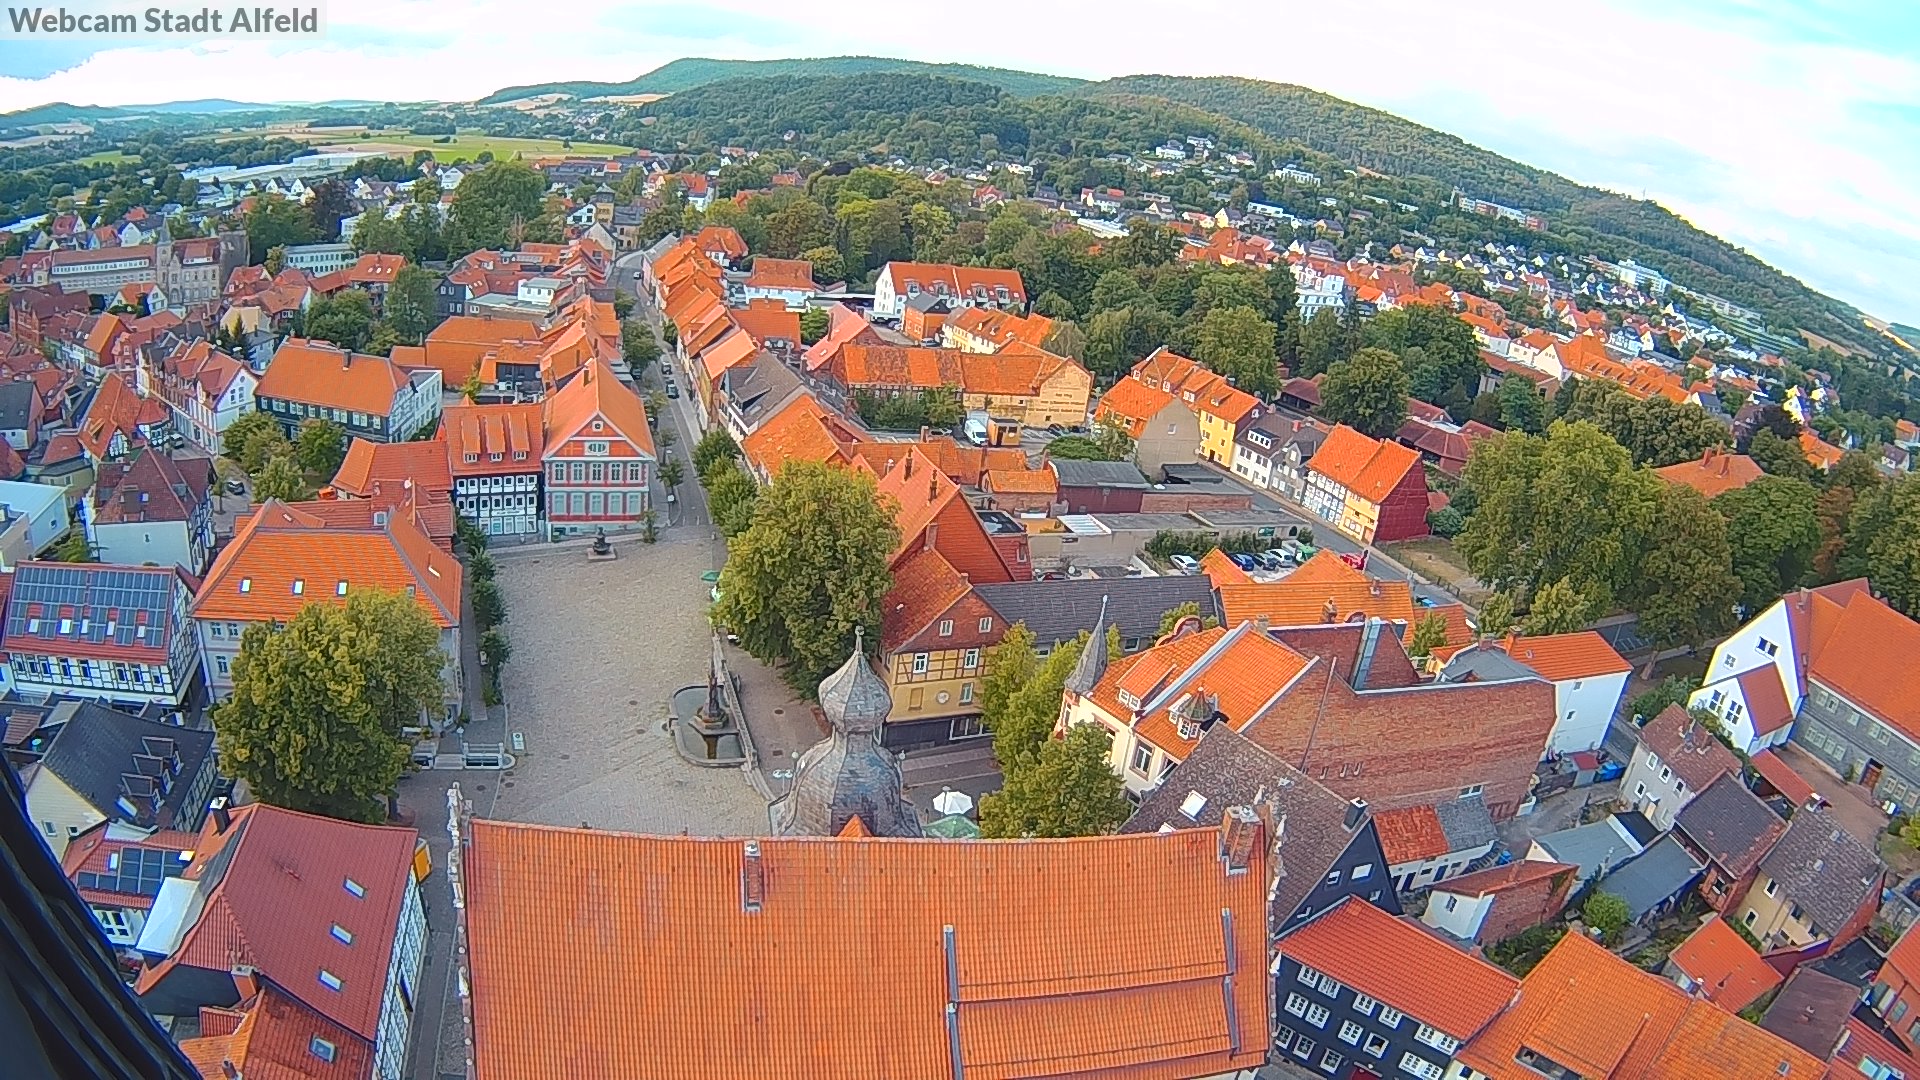 Webcam der Stadt Alfeld - Marktplatz